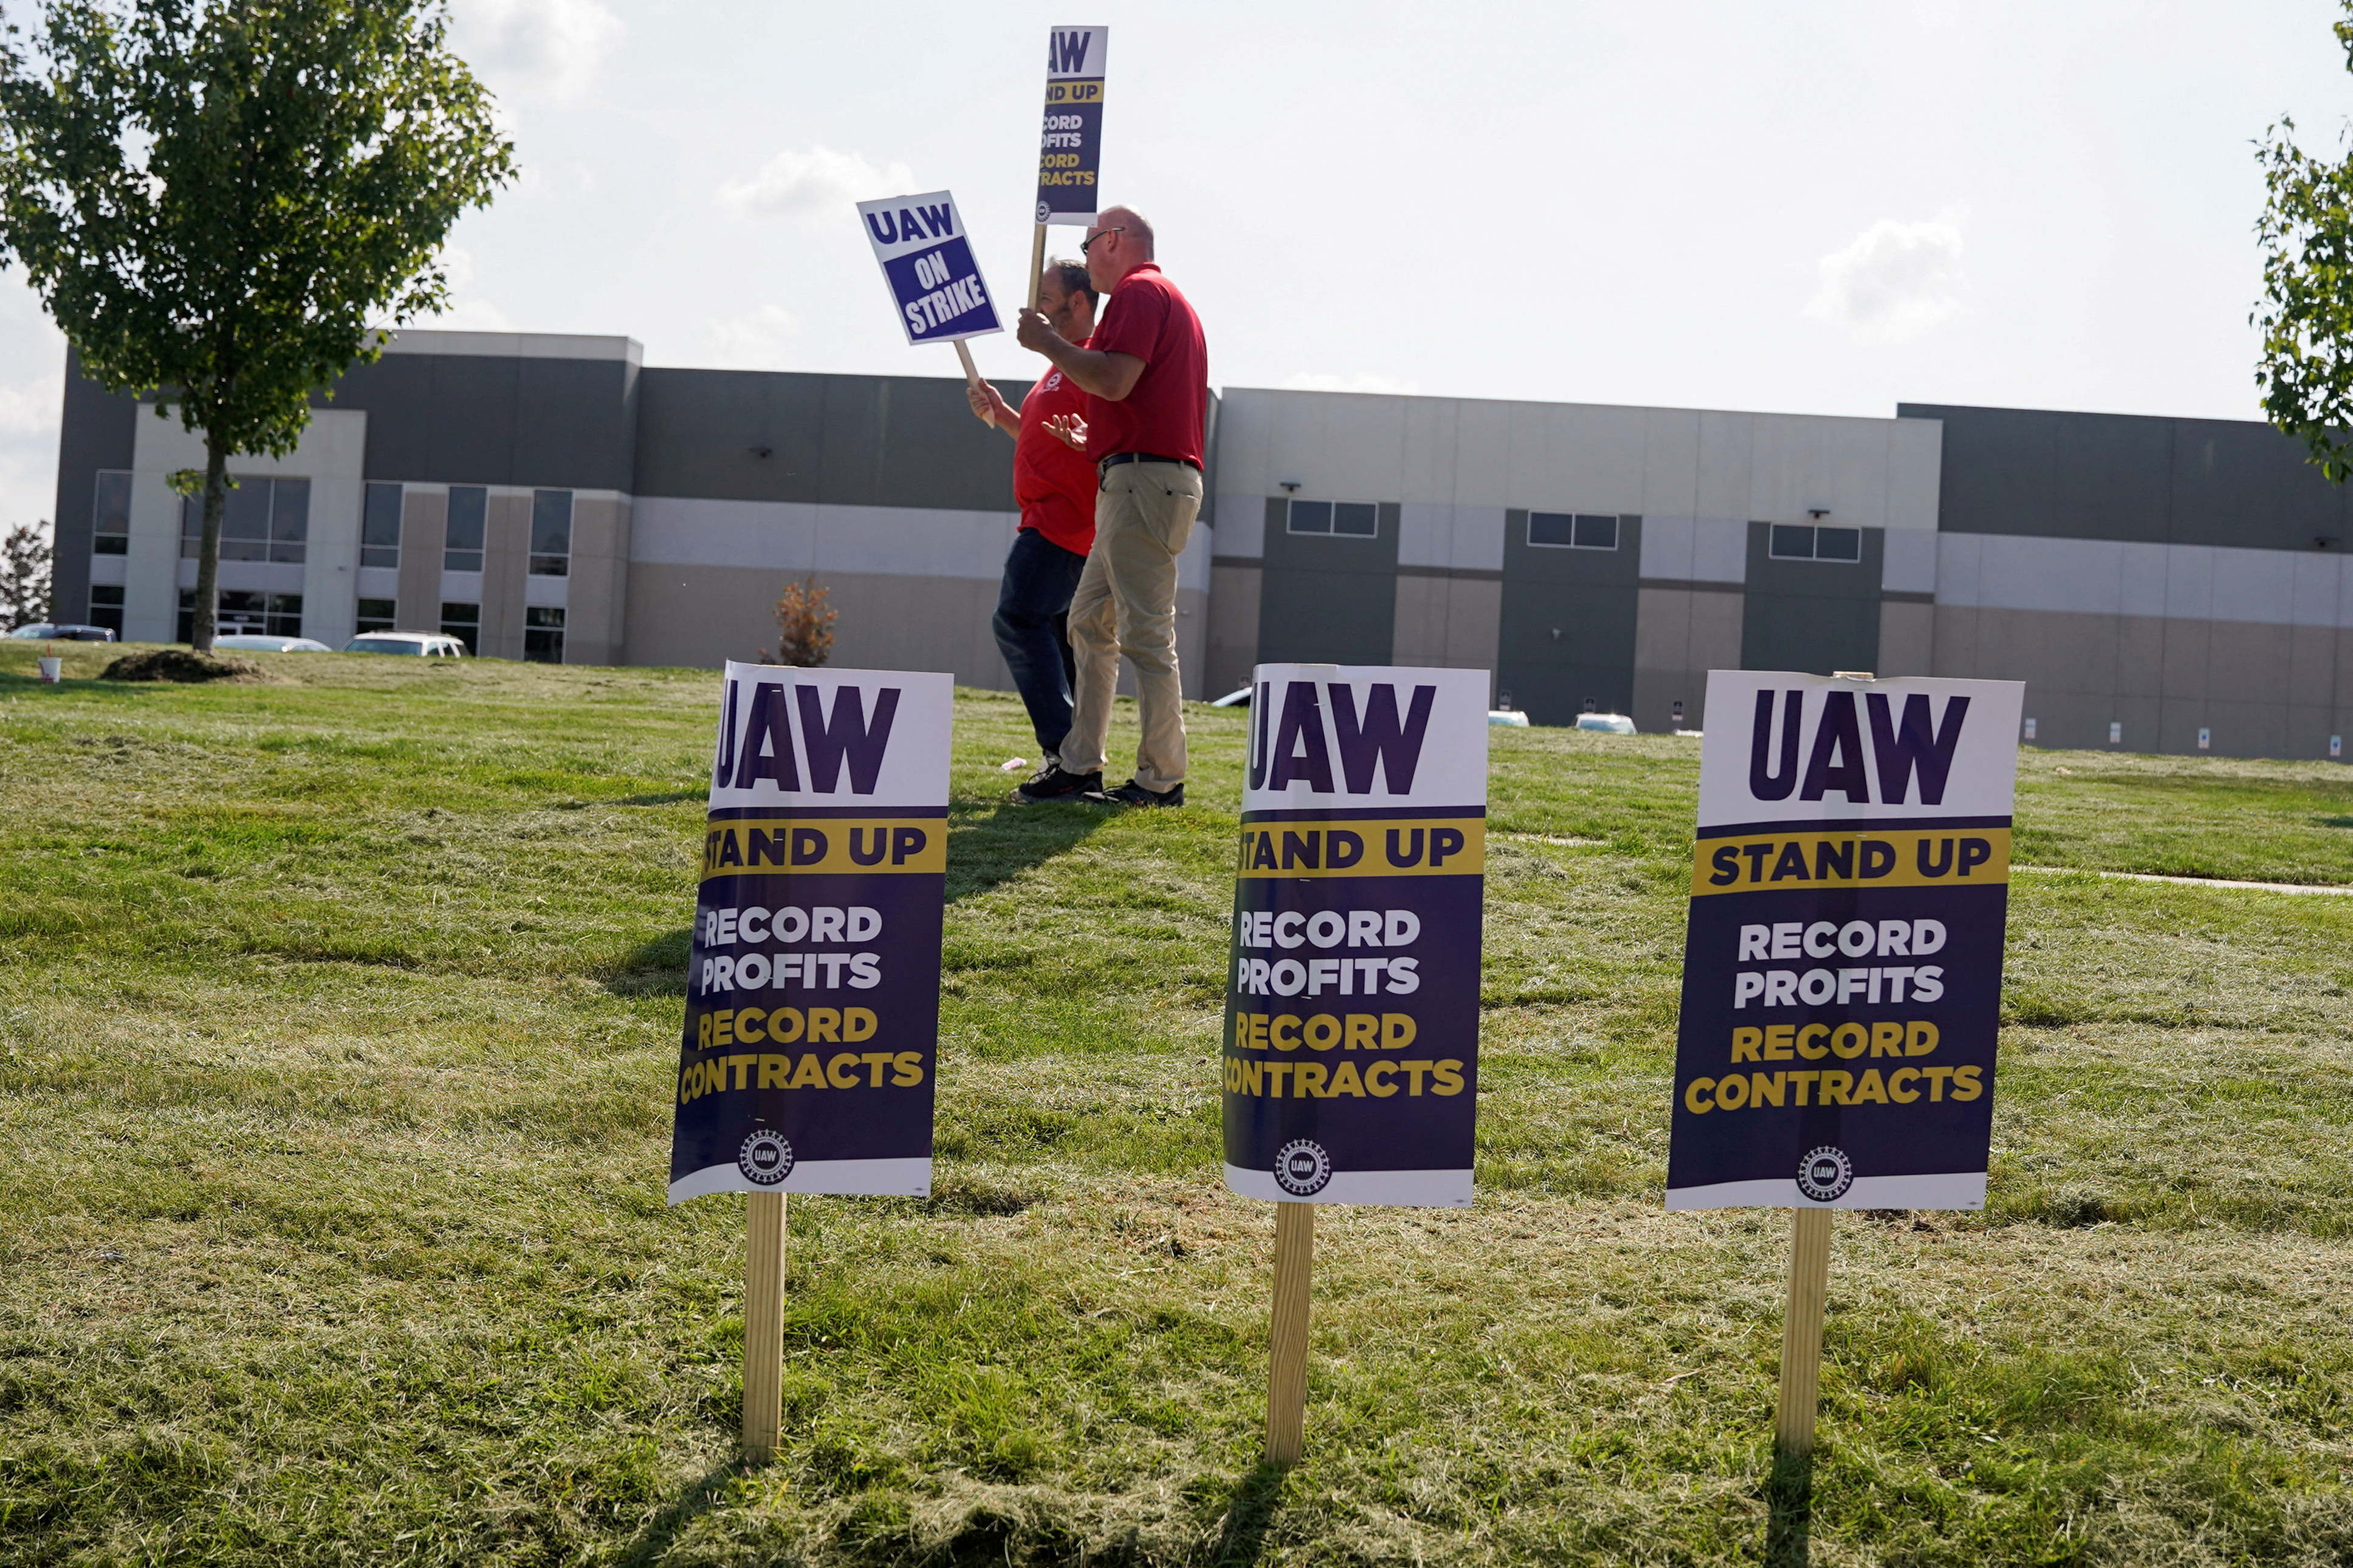 UAW strike continues, in Burton